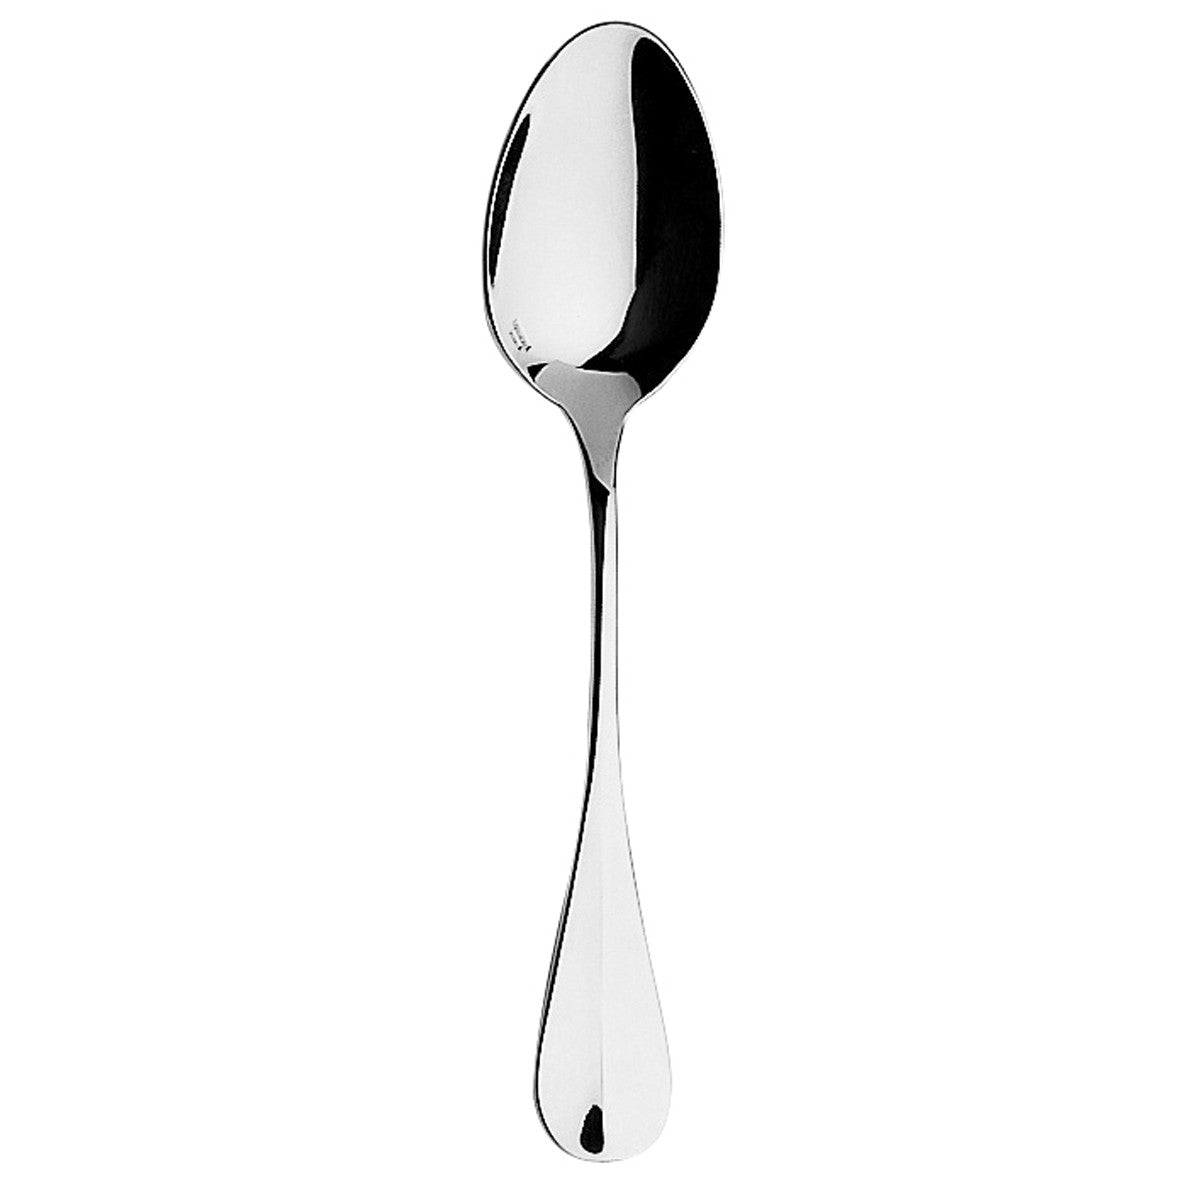 The Rocher Spoon